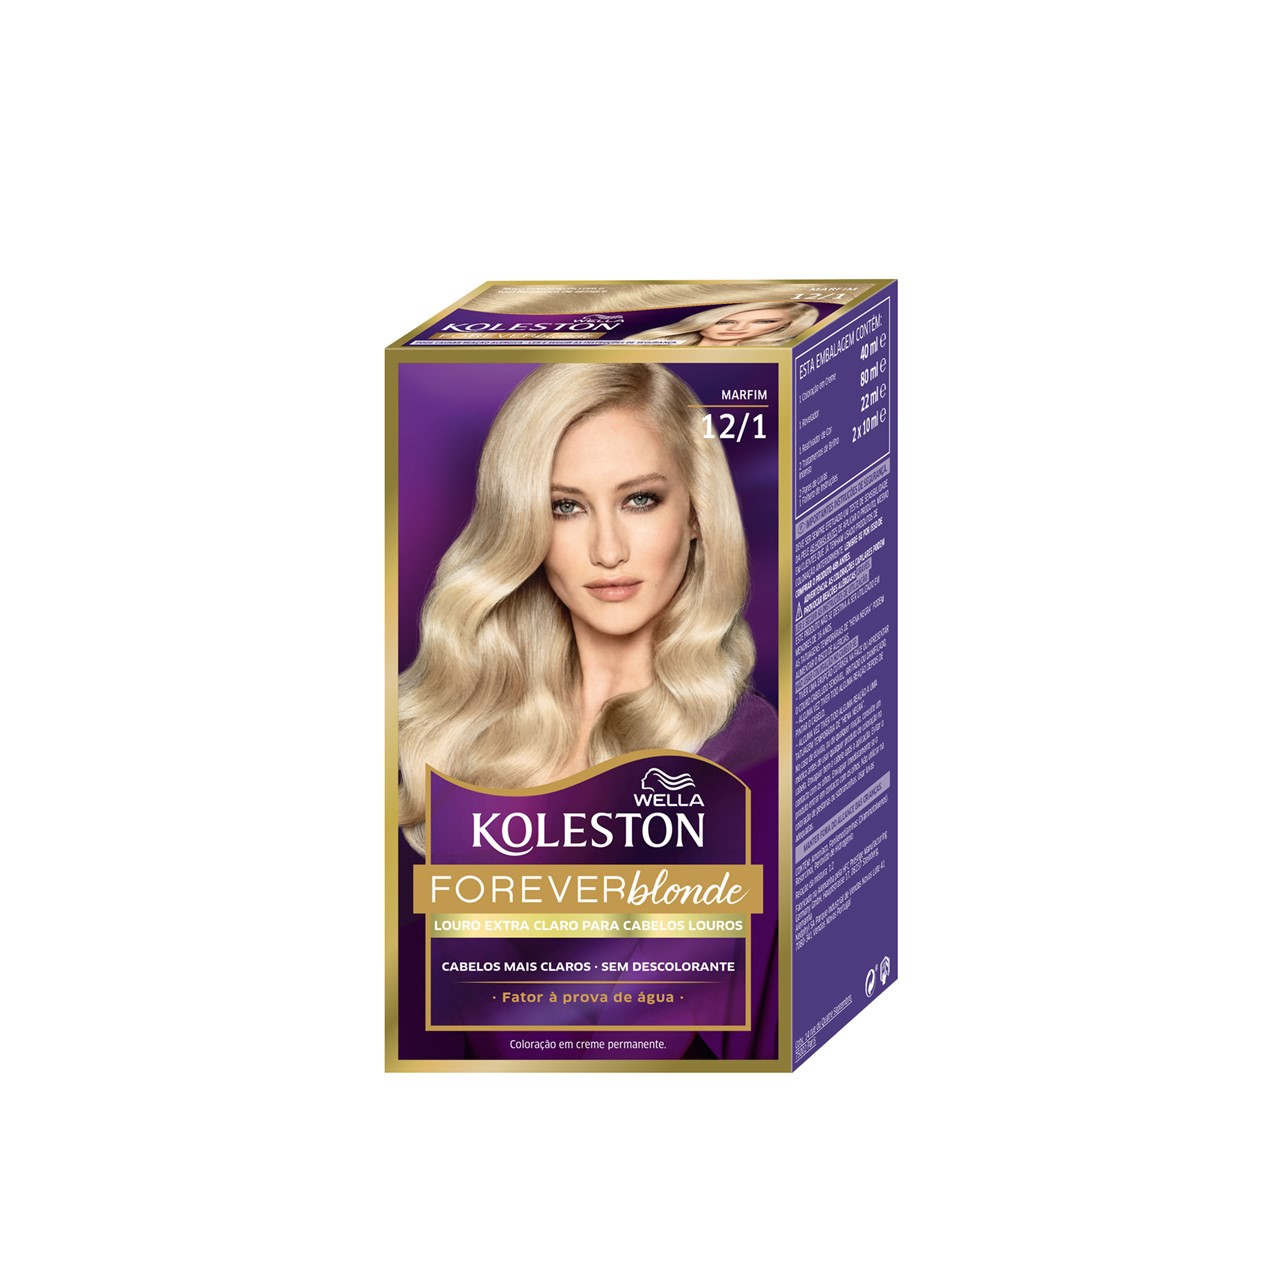 Wella Koleston 12/1 Extra Ash Blonde Permanent Hair Color